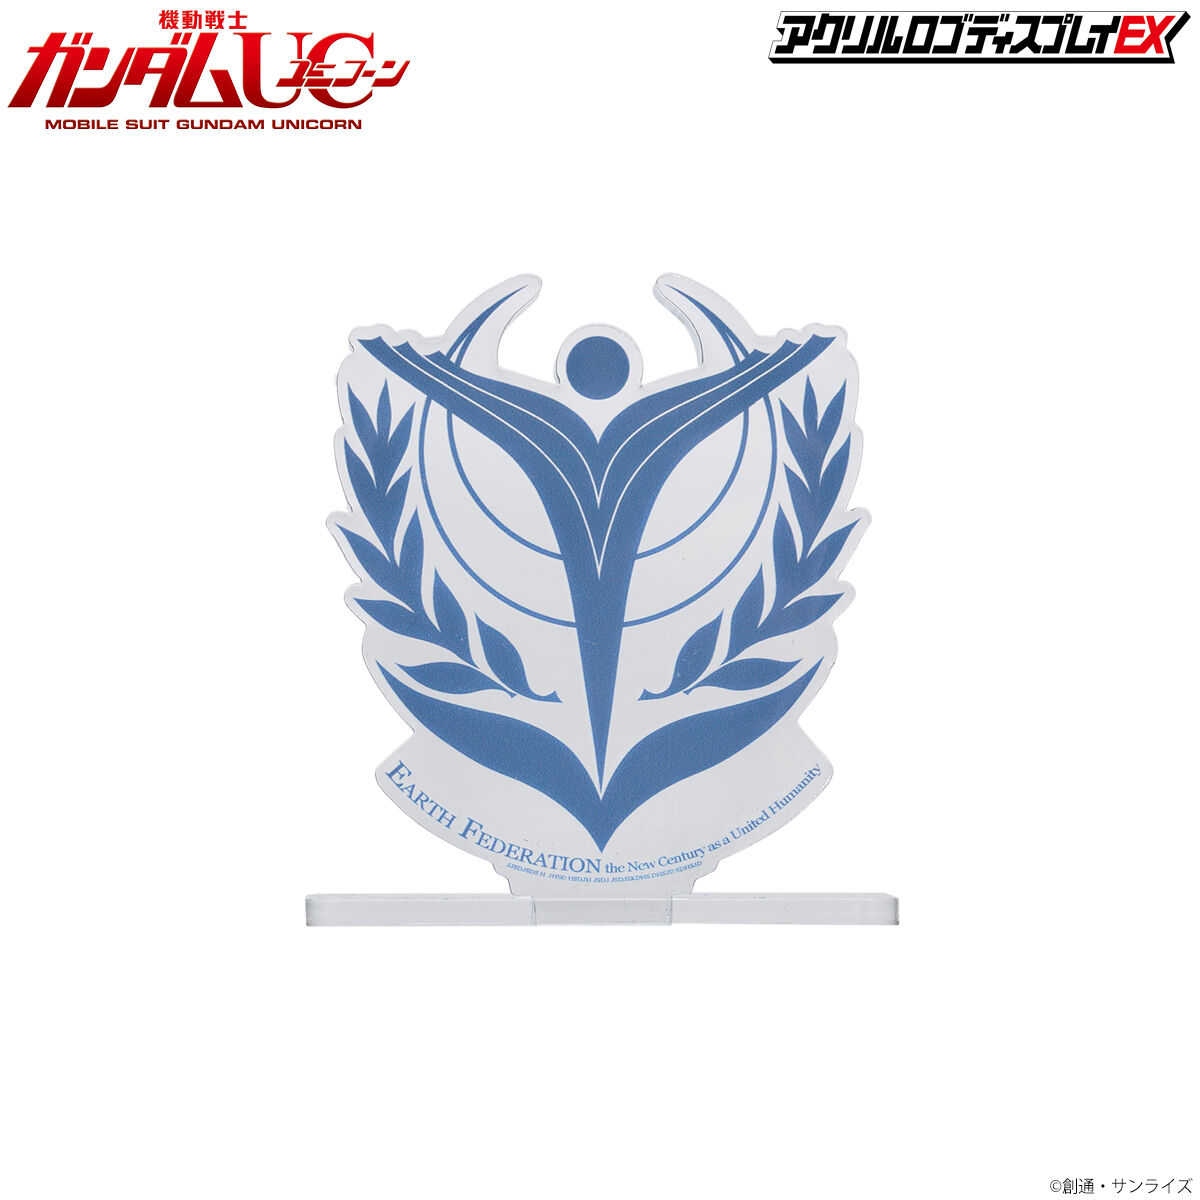 Acrylic Logo Diplay EX-Mobile Suit Gundam Unicorn : Earth Federation(The New Century as a United Humanity) Mark